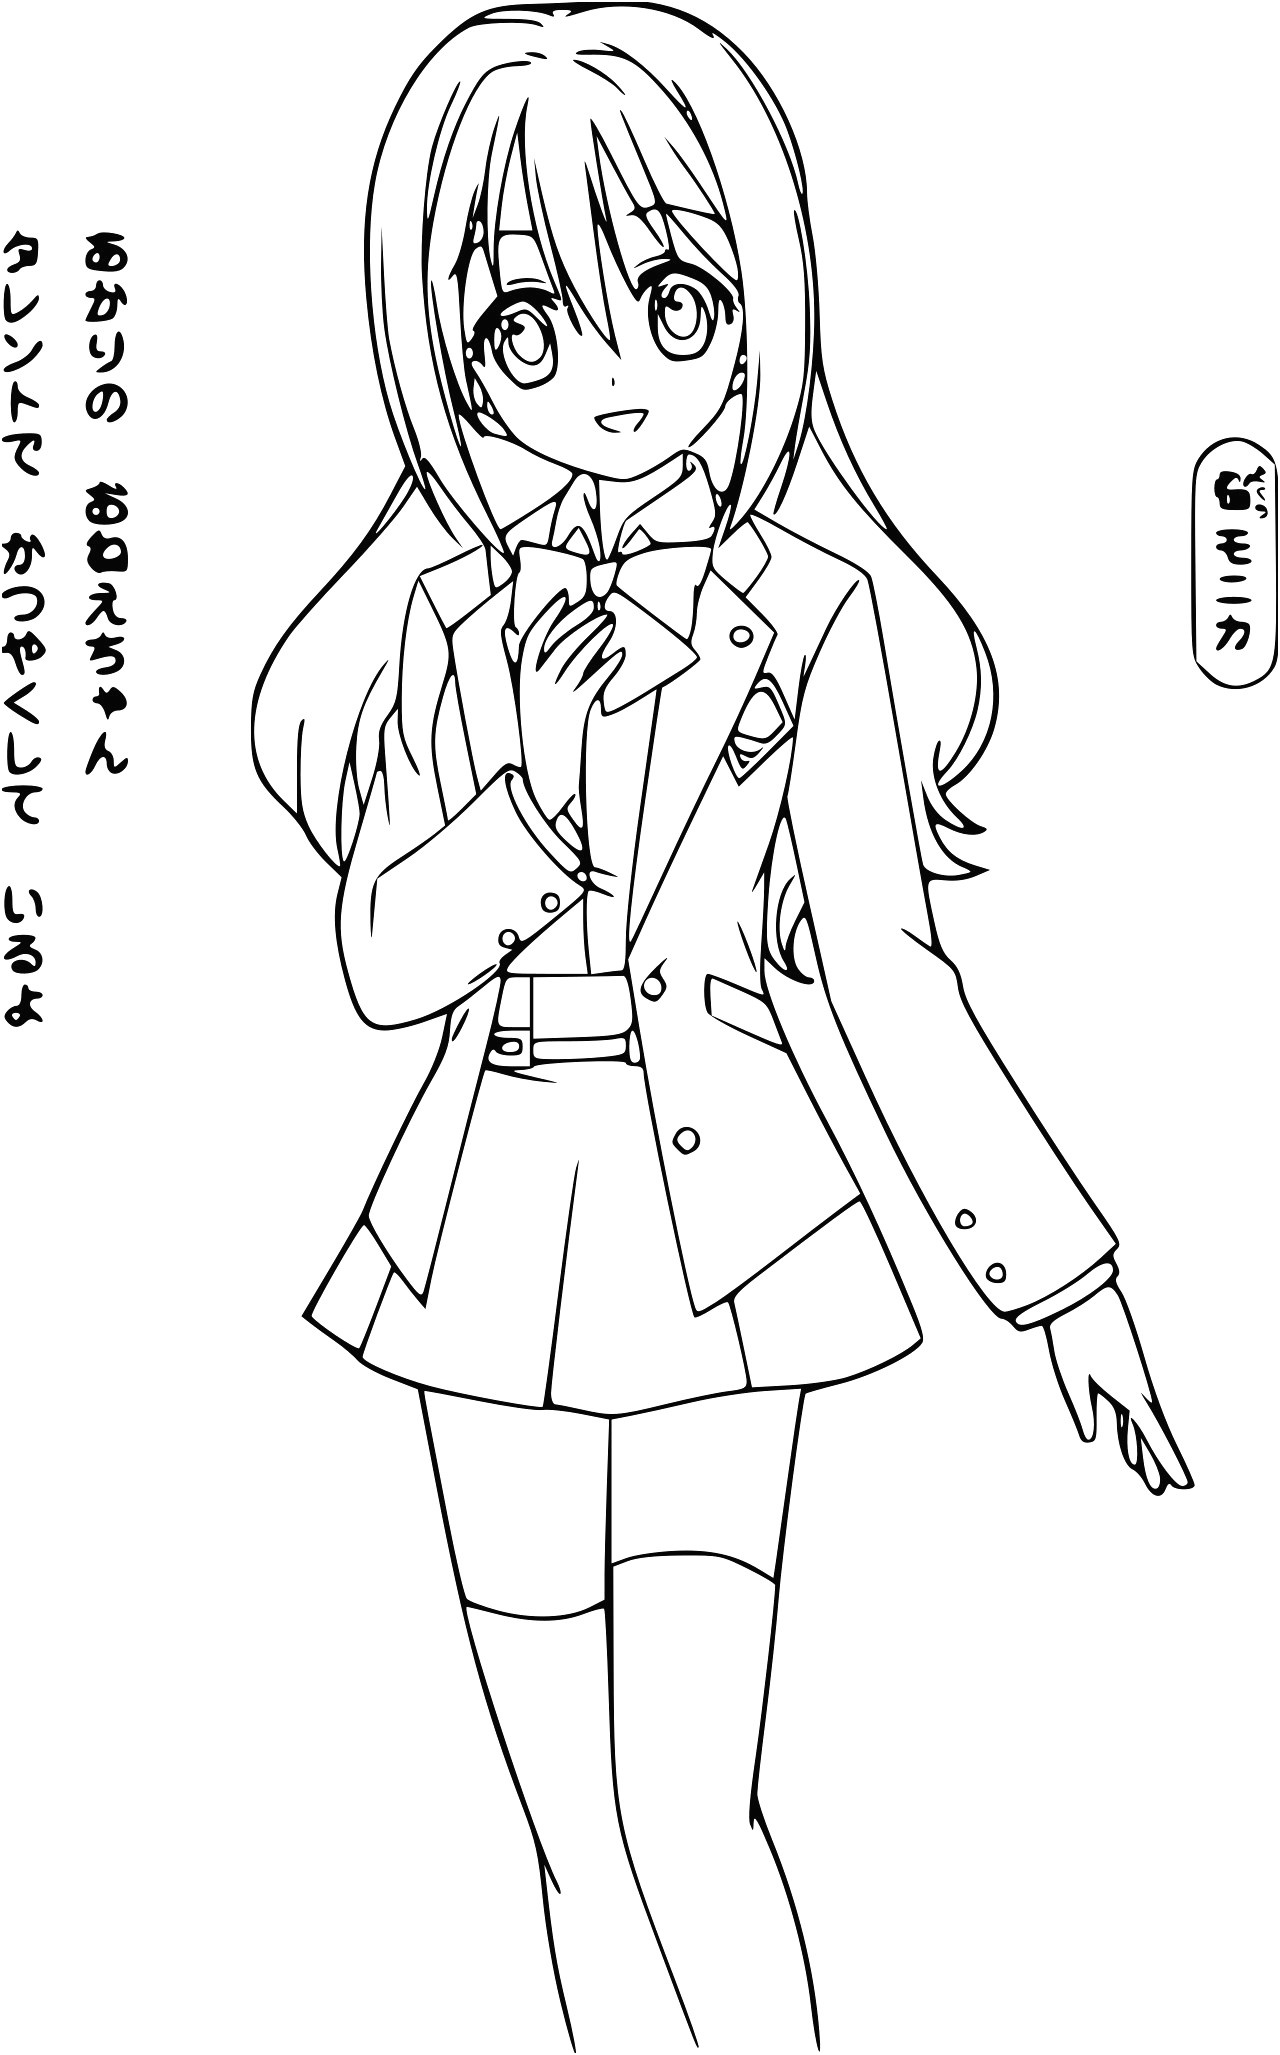 15 coloriage de princesse manga a imprimer avec dessin kawaii fille avec 15 coloriage de princesse manga a imprimer avec dessin kawaii fille auf manga dessin a imprimer et dessin kawaii fille a imprim